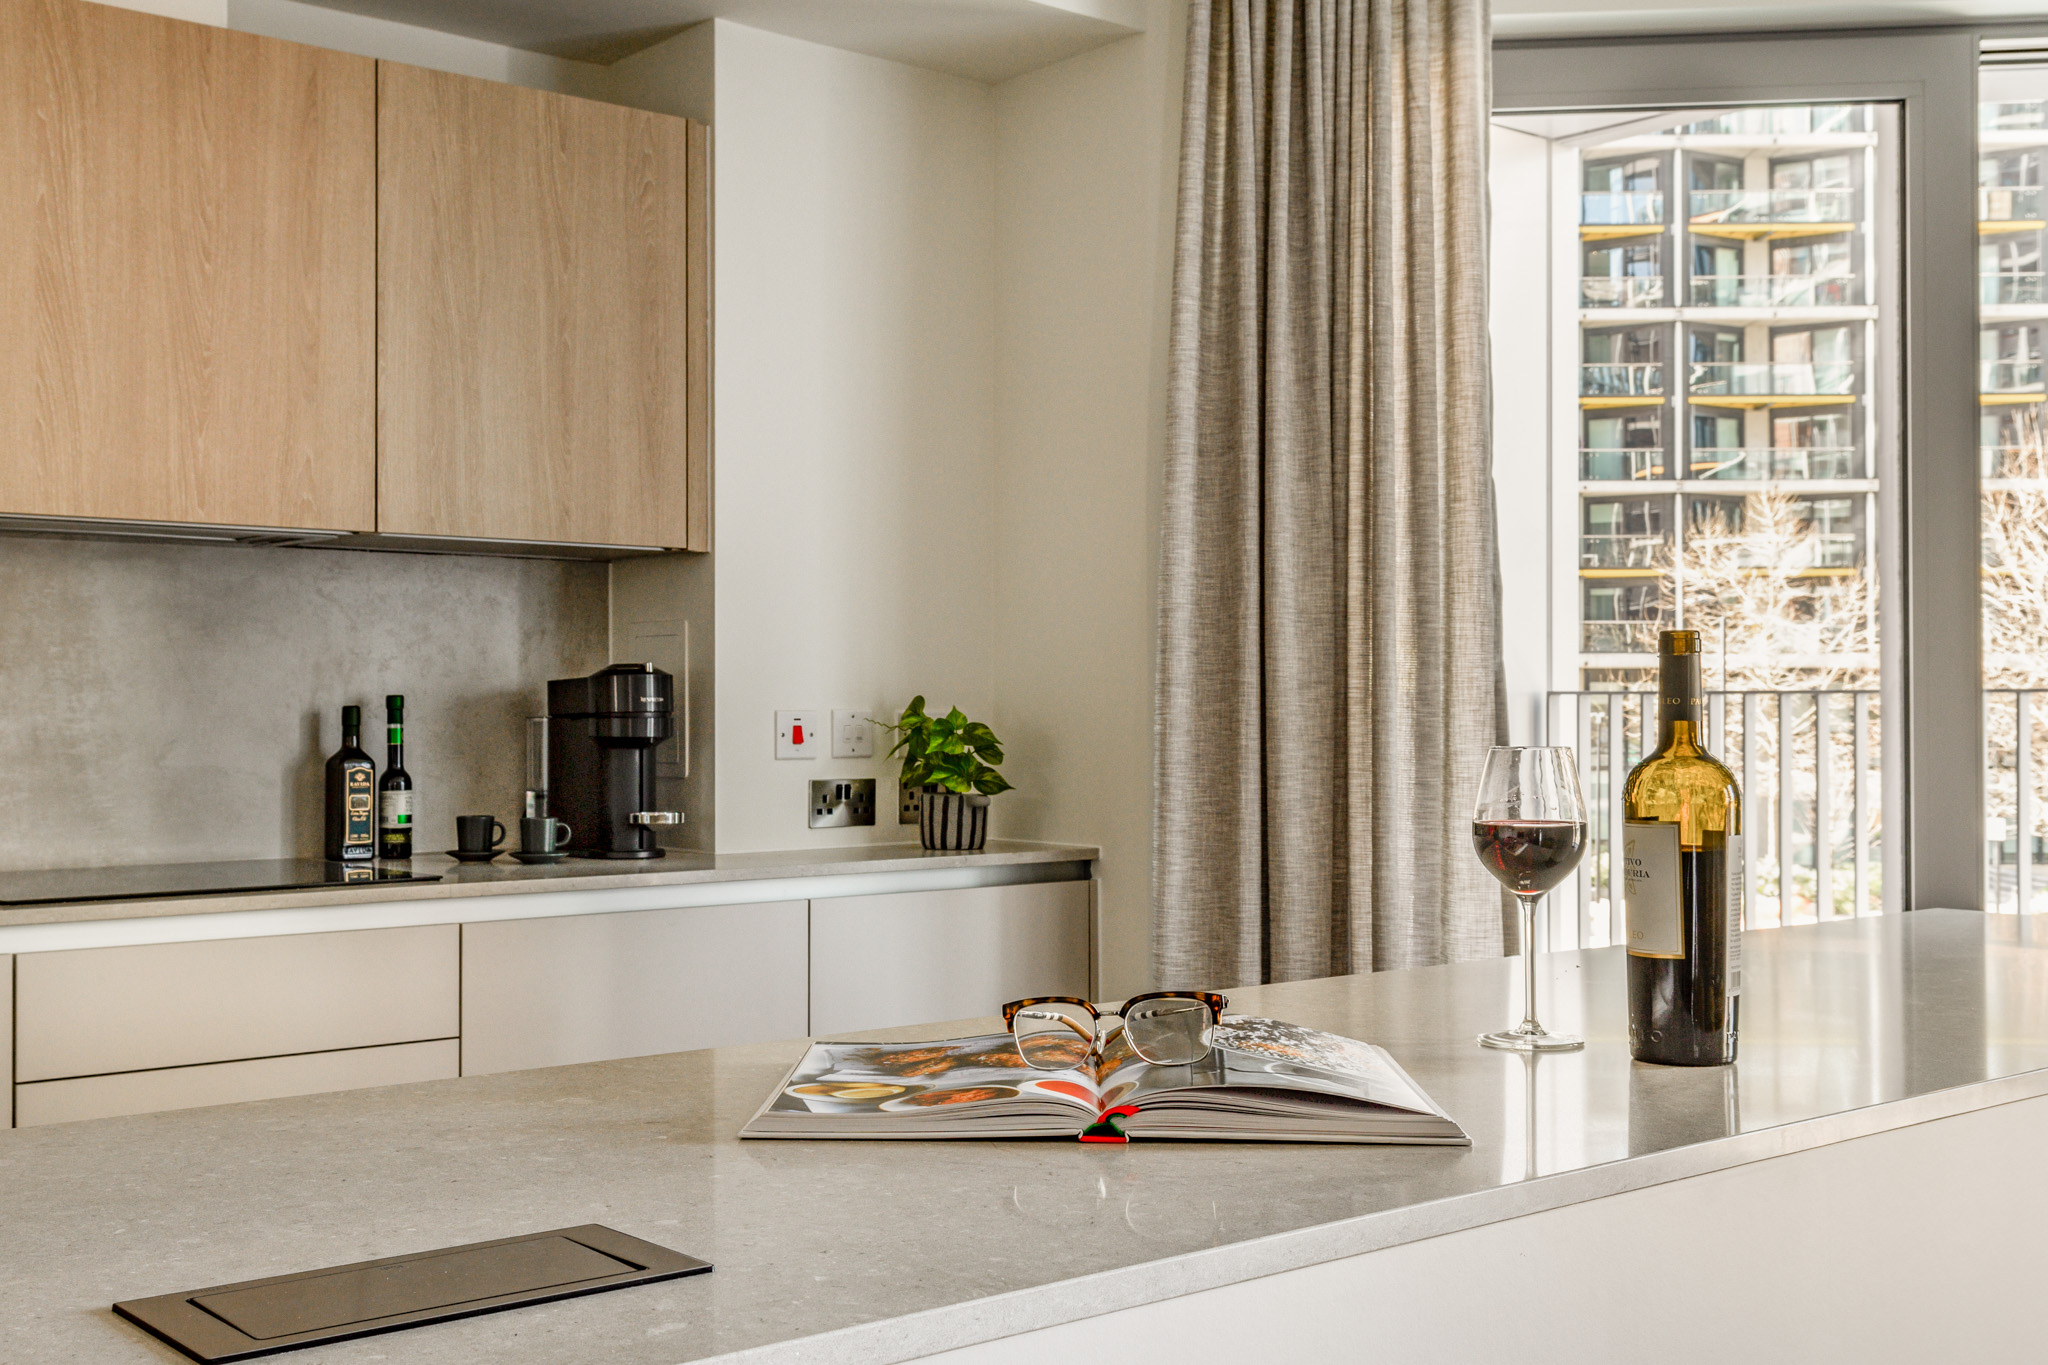 Kitchen - Three Bedroom Apartment - Urban rest Battersea Apartments - London - Urban Rest